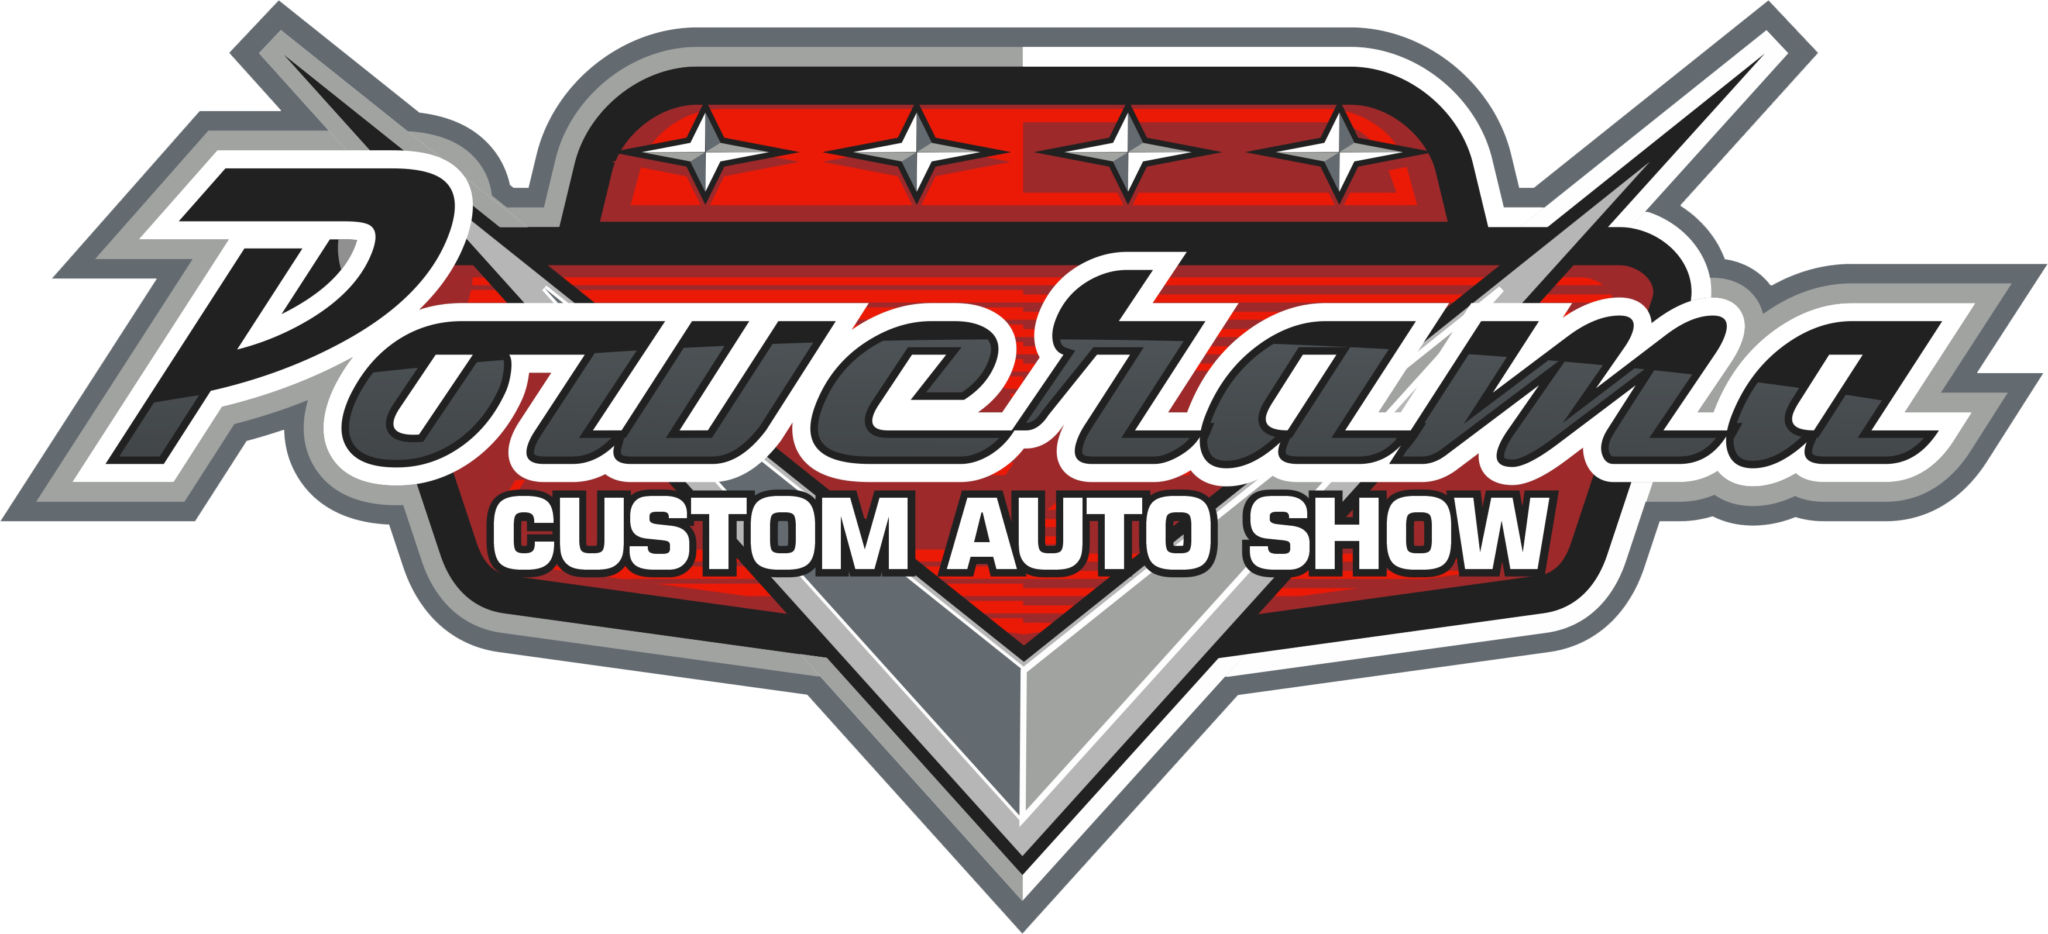 Powerama Custom Auto Show